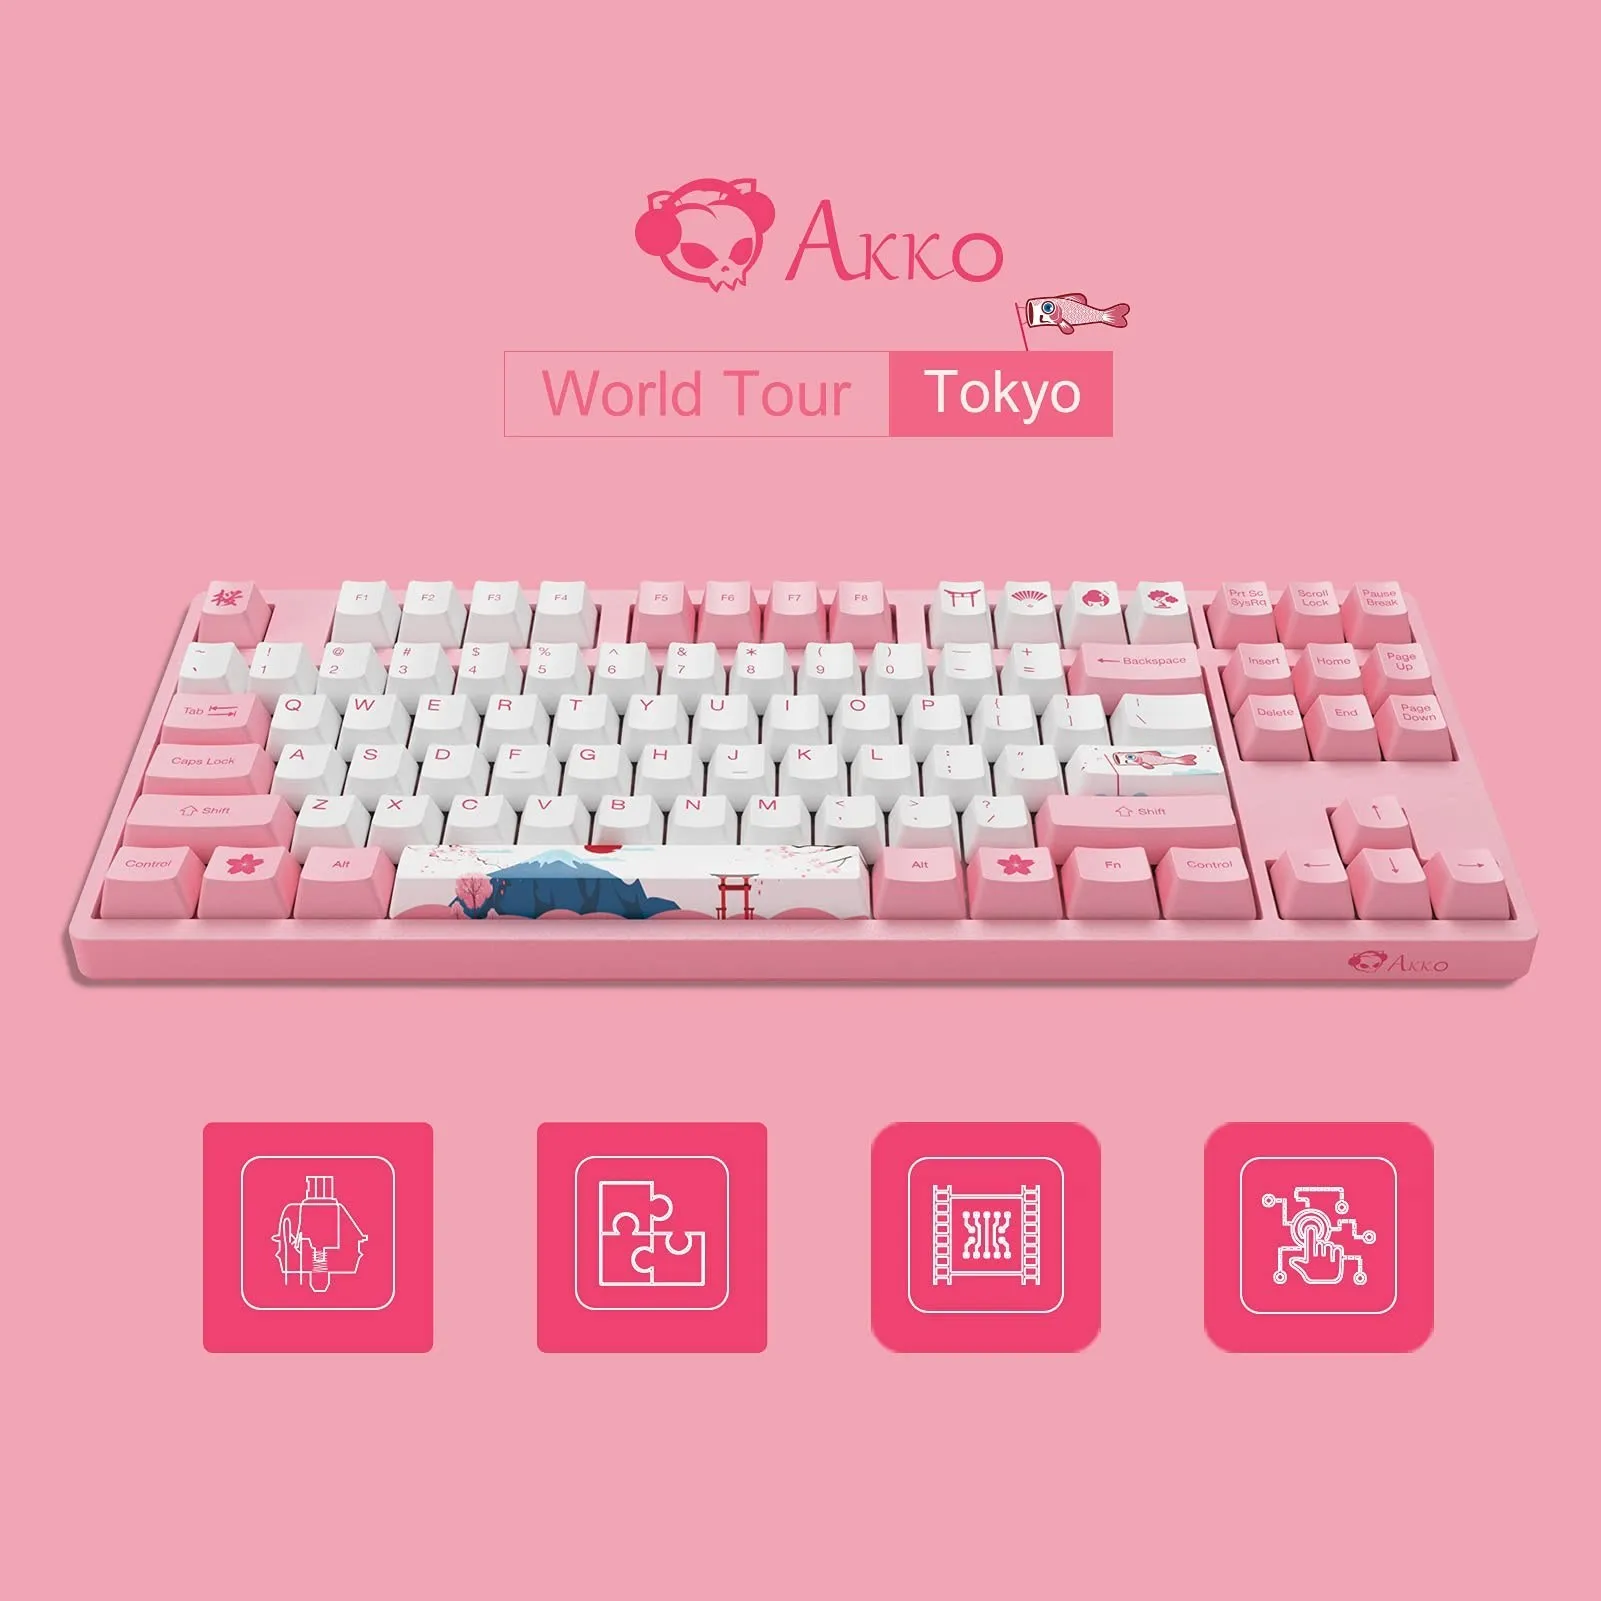 Akko 3087 V2 World Tour Tokyo R1 Mechanical Gaming Keyboard Wired TKL 87 Key with OEM 2 - Pudding Keycap